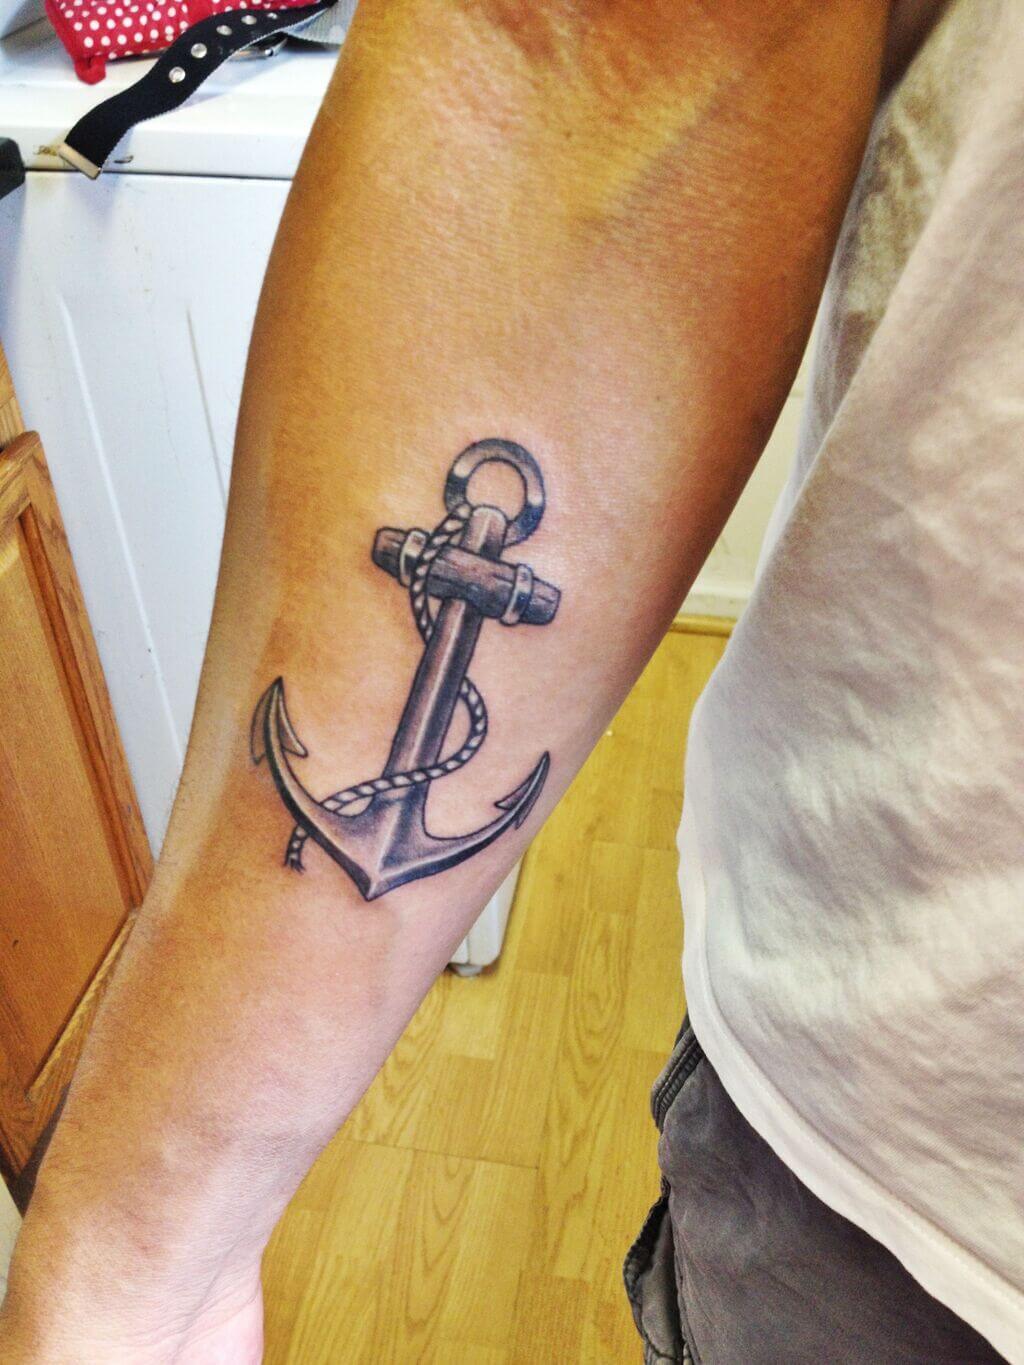 Anchor Tattoo for Men